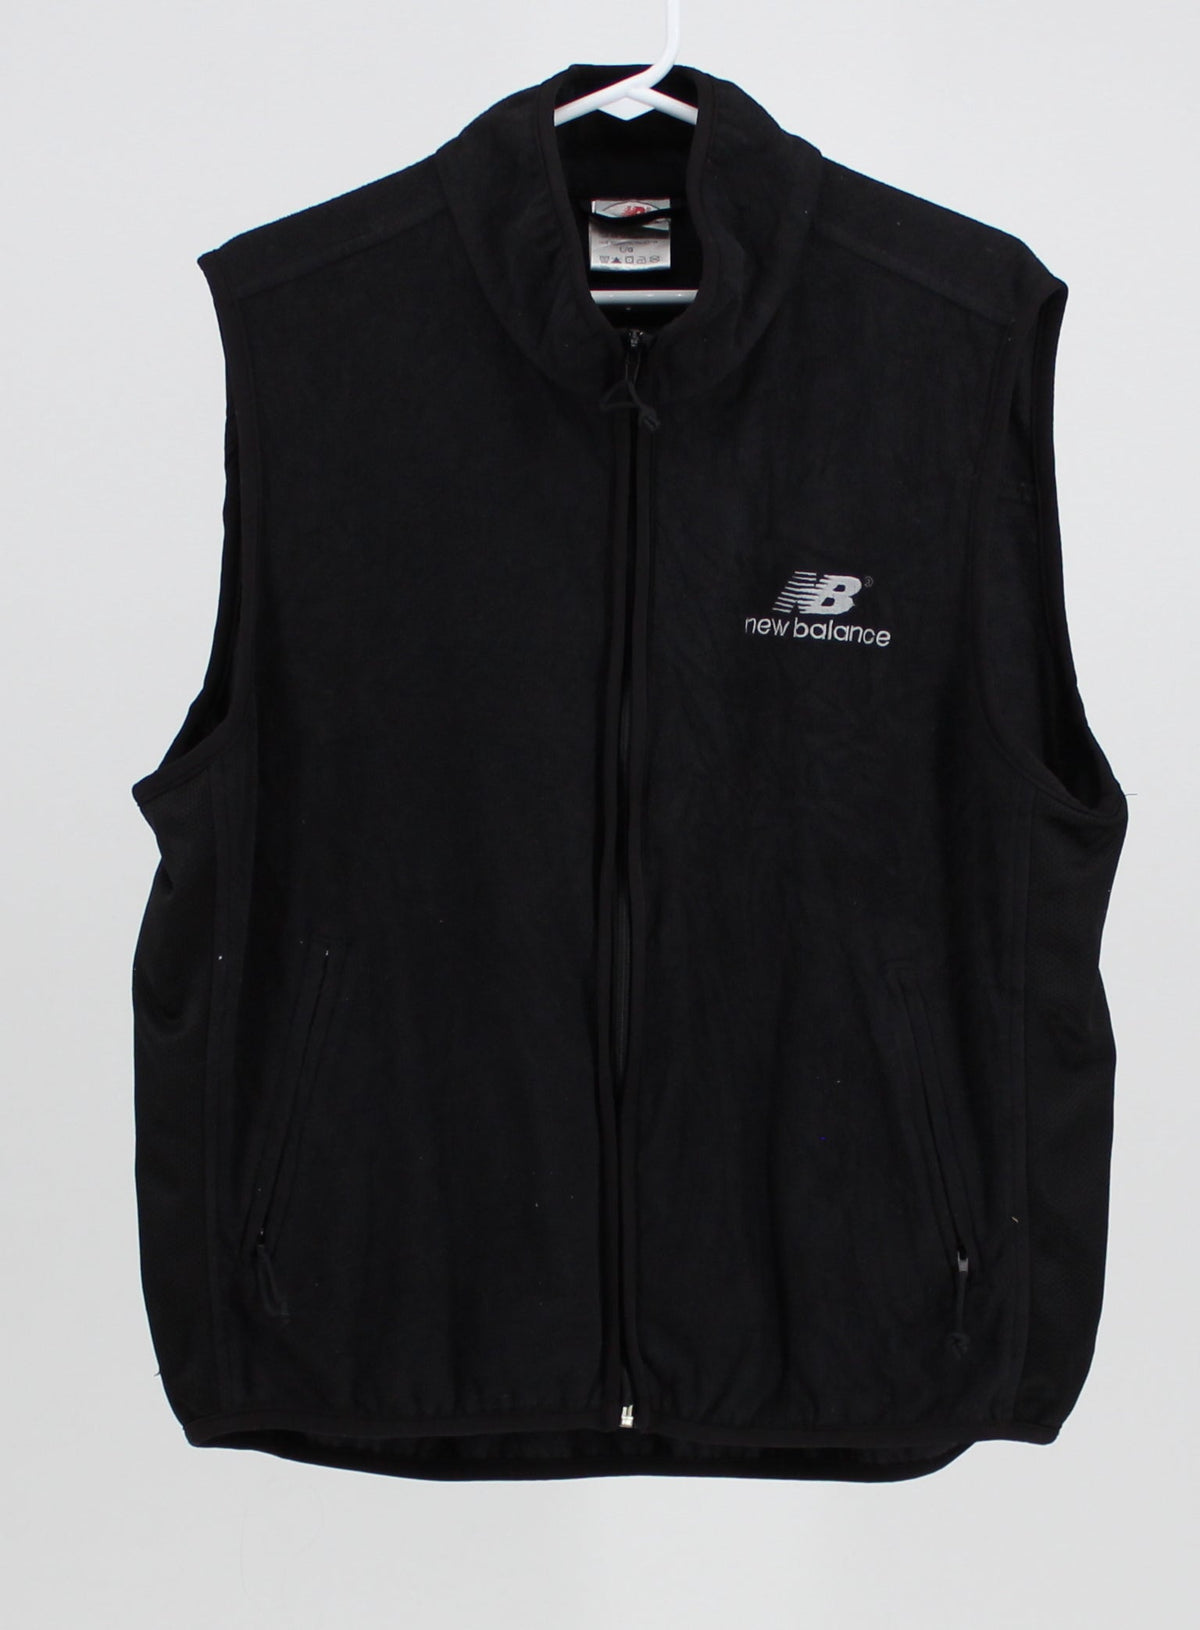 New Balance Black Fleece Vest